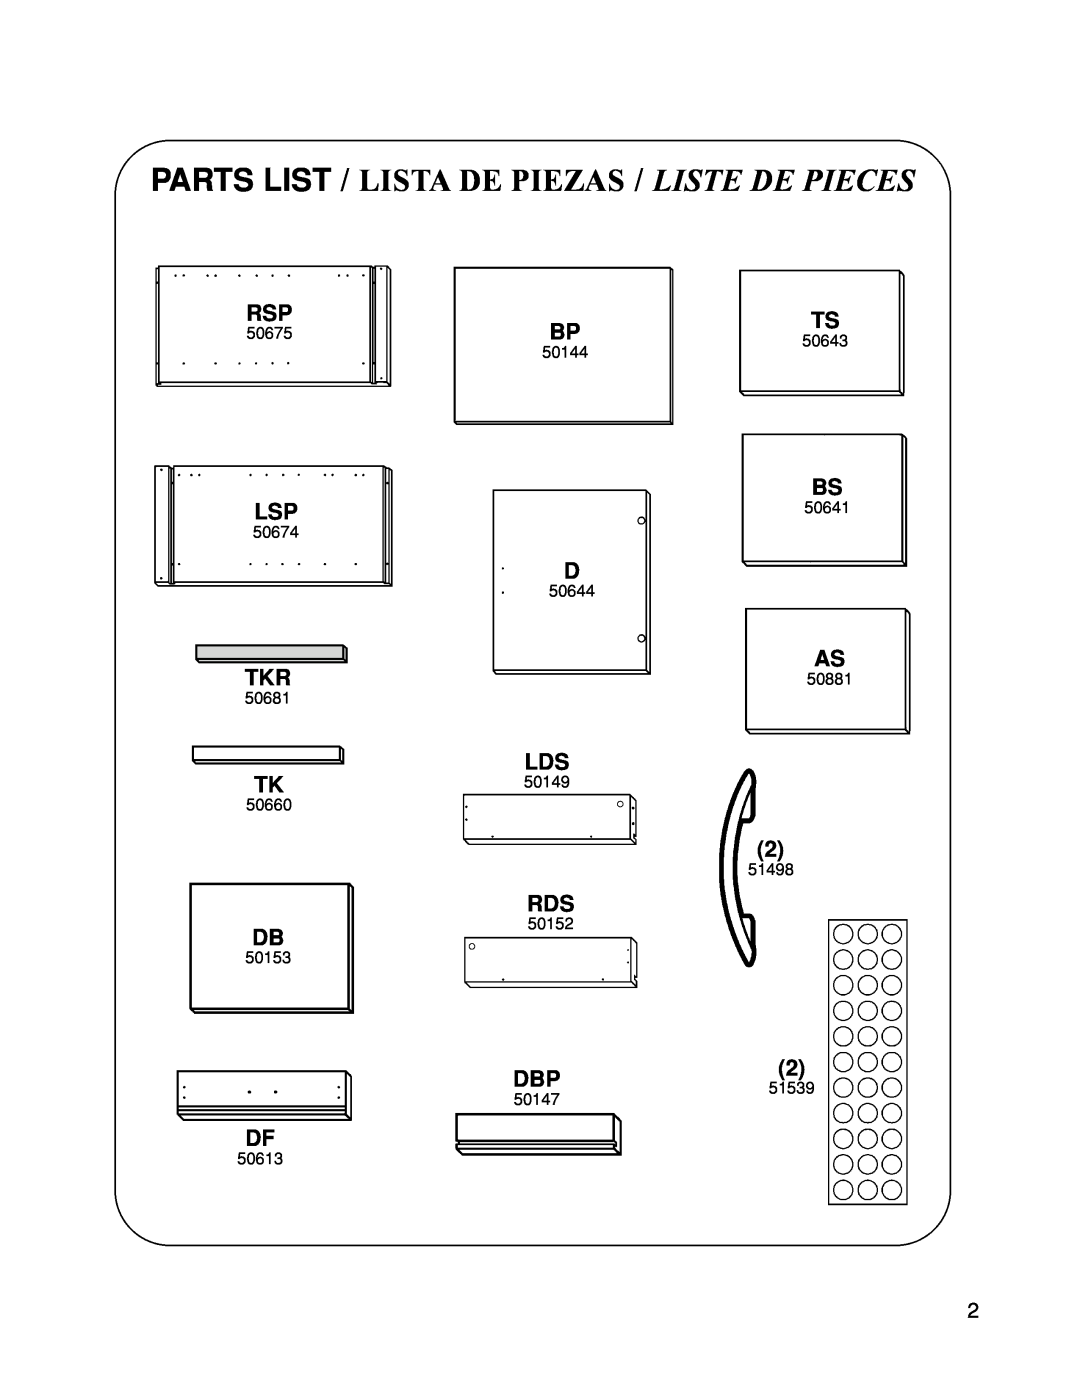 Closet Maid 12115 manual Parts List / Lista De Piezas / Liste De Pieces 